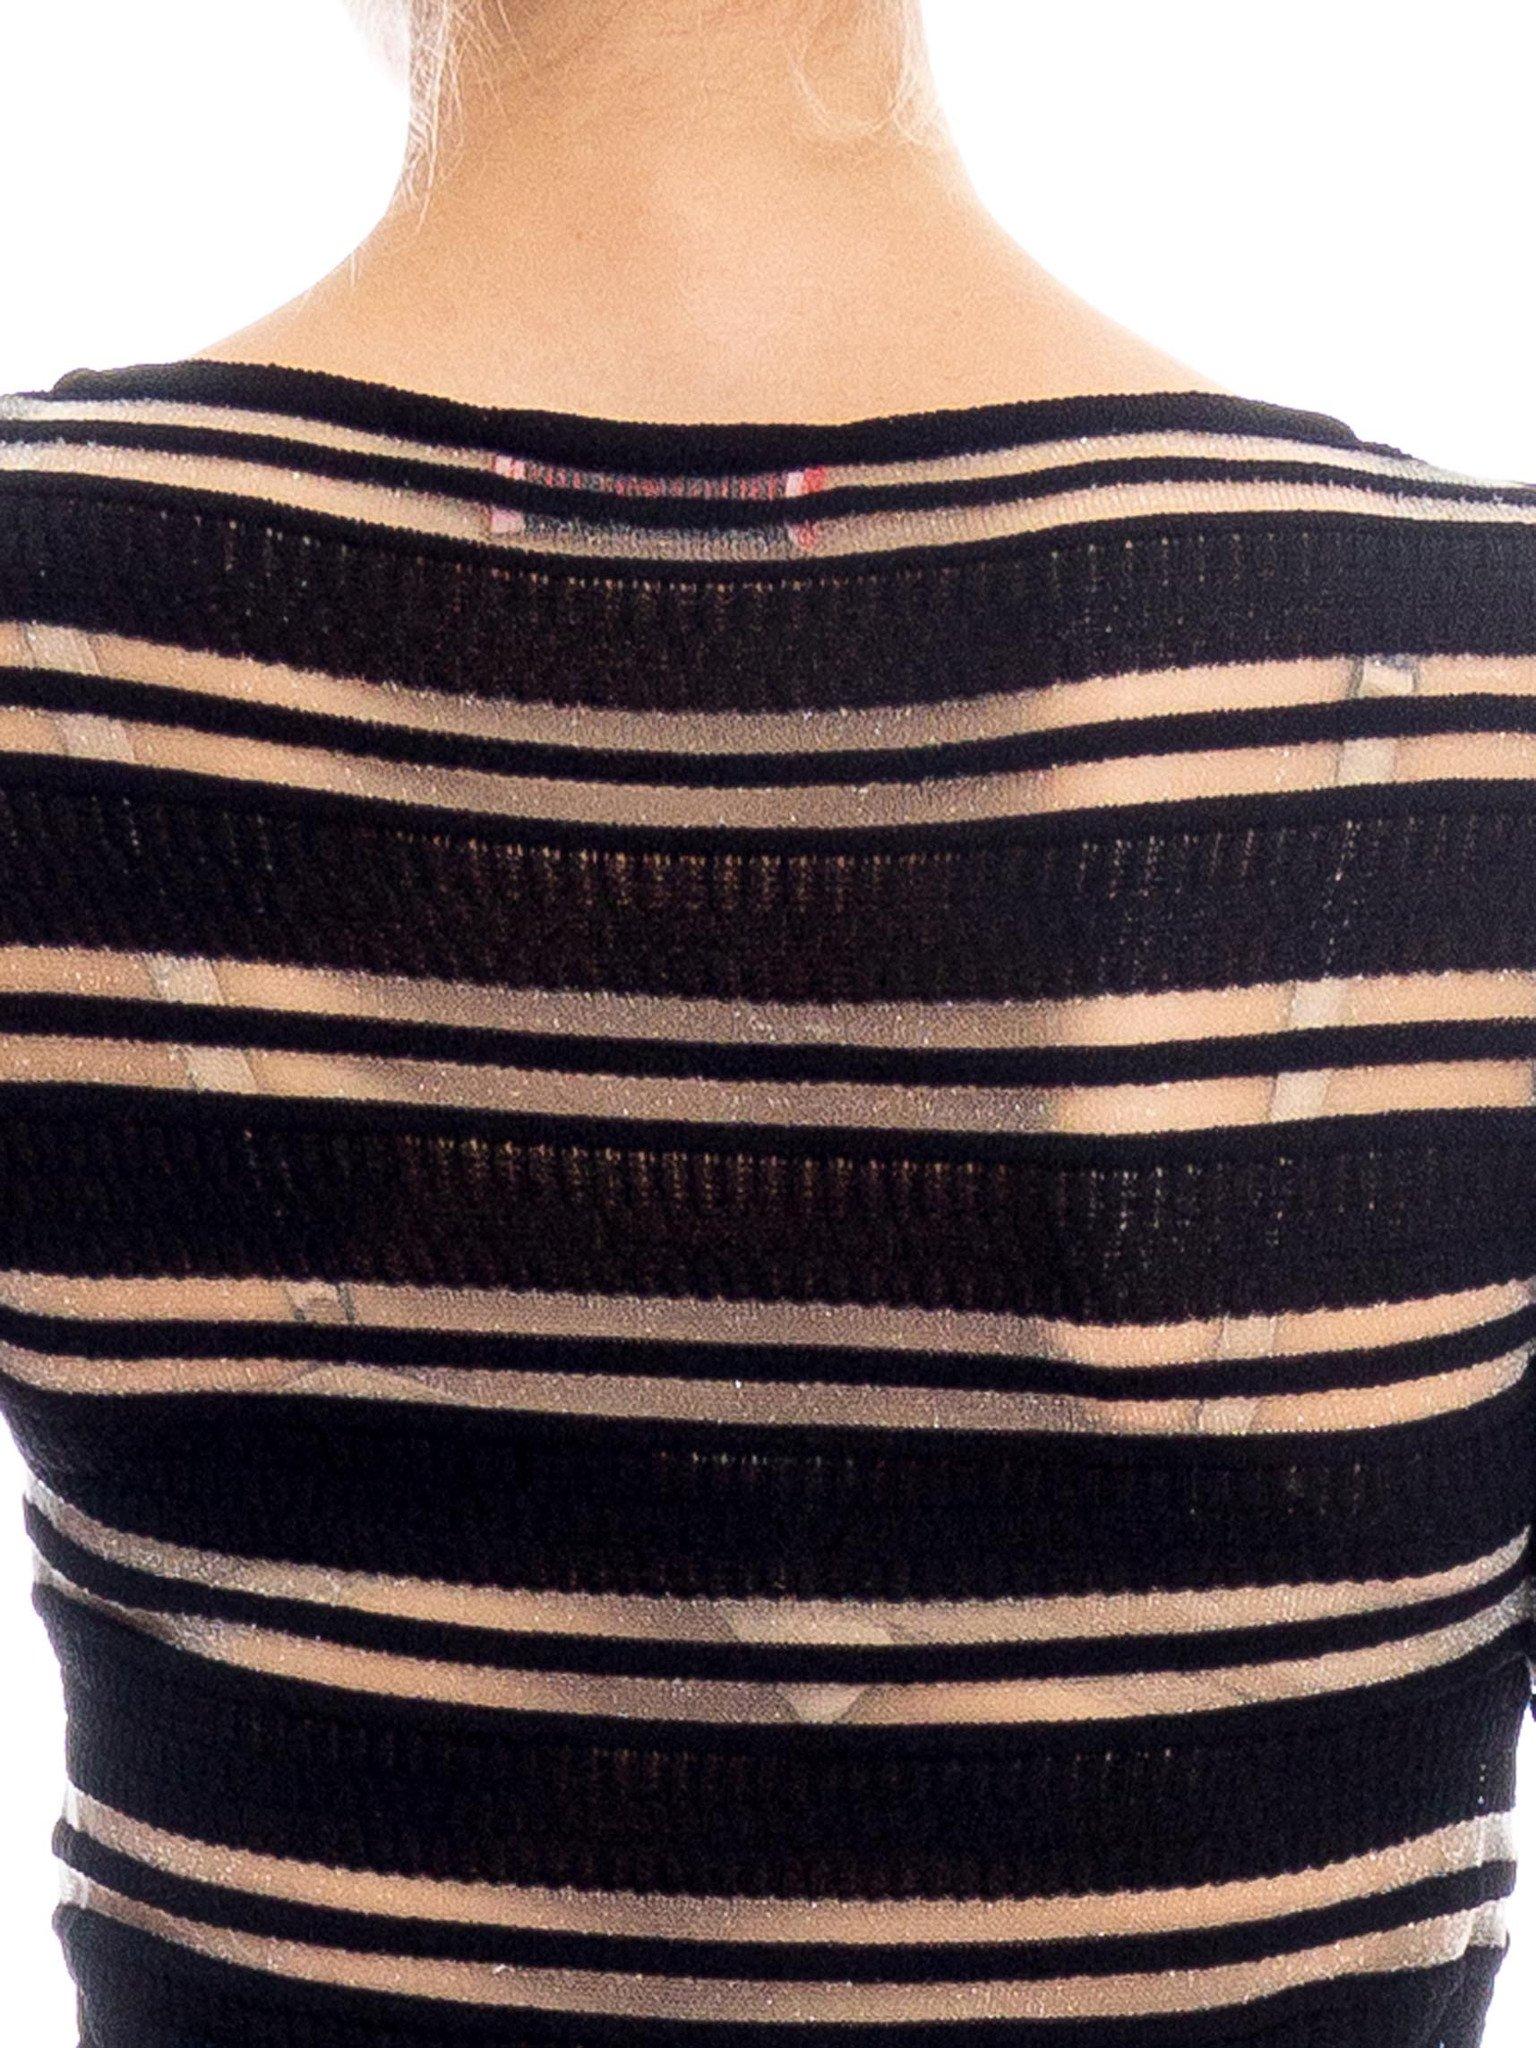 1990S DOROTHEE BIS Black & Silver Metallic Sheer Stripe Knit Dress For Sale 2